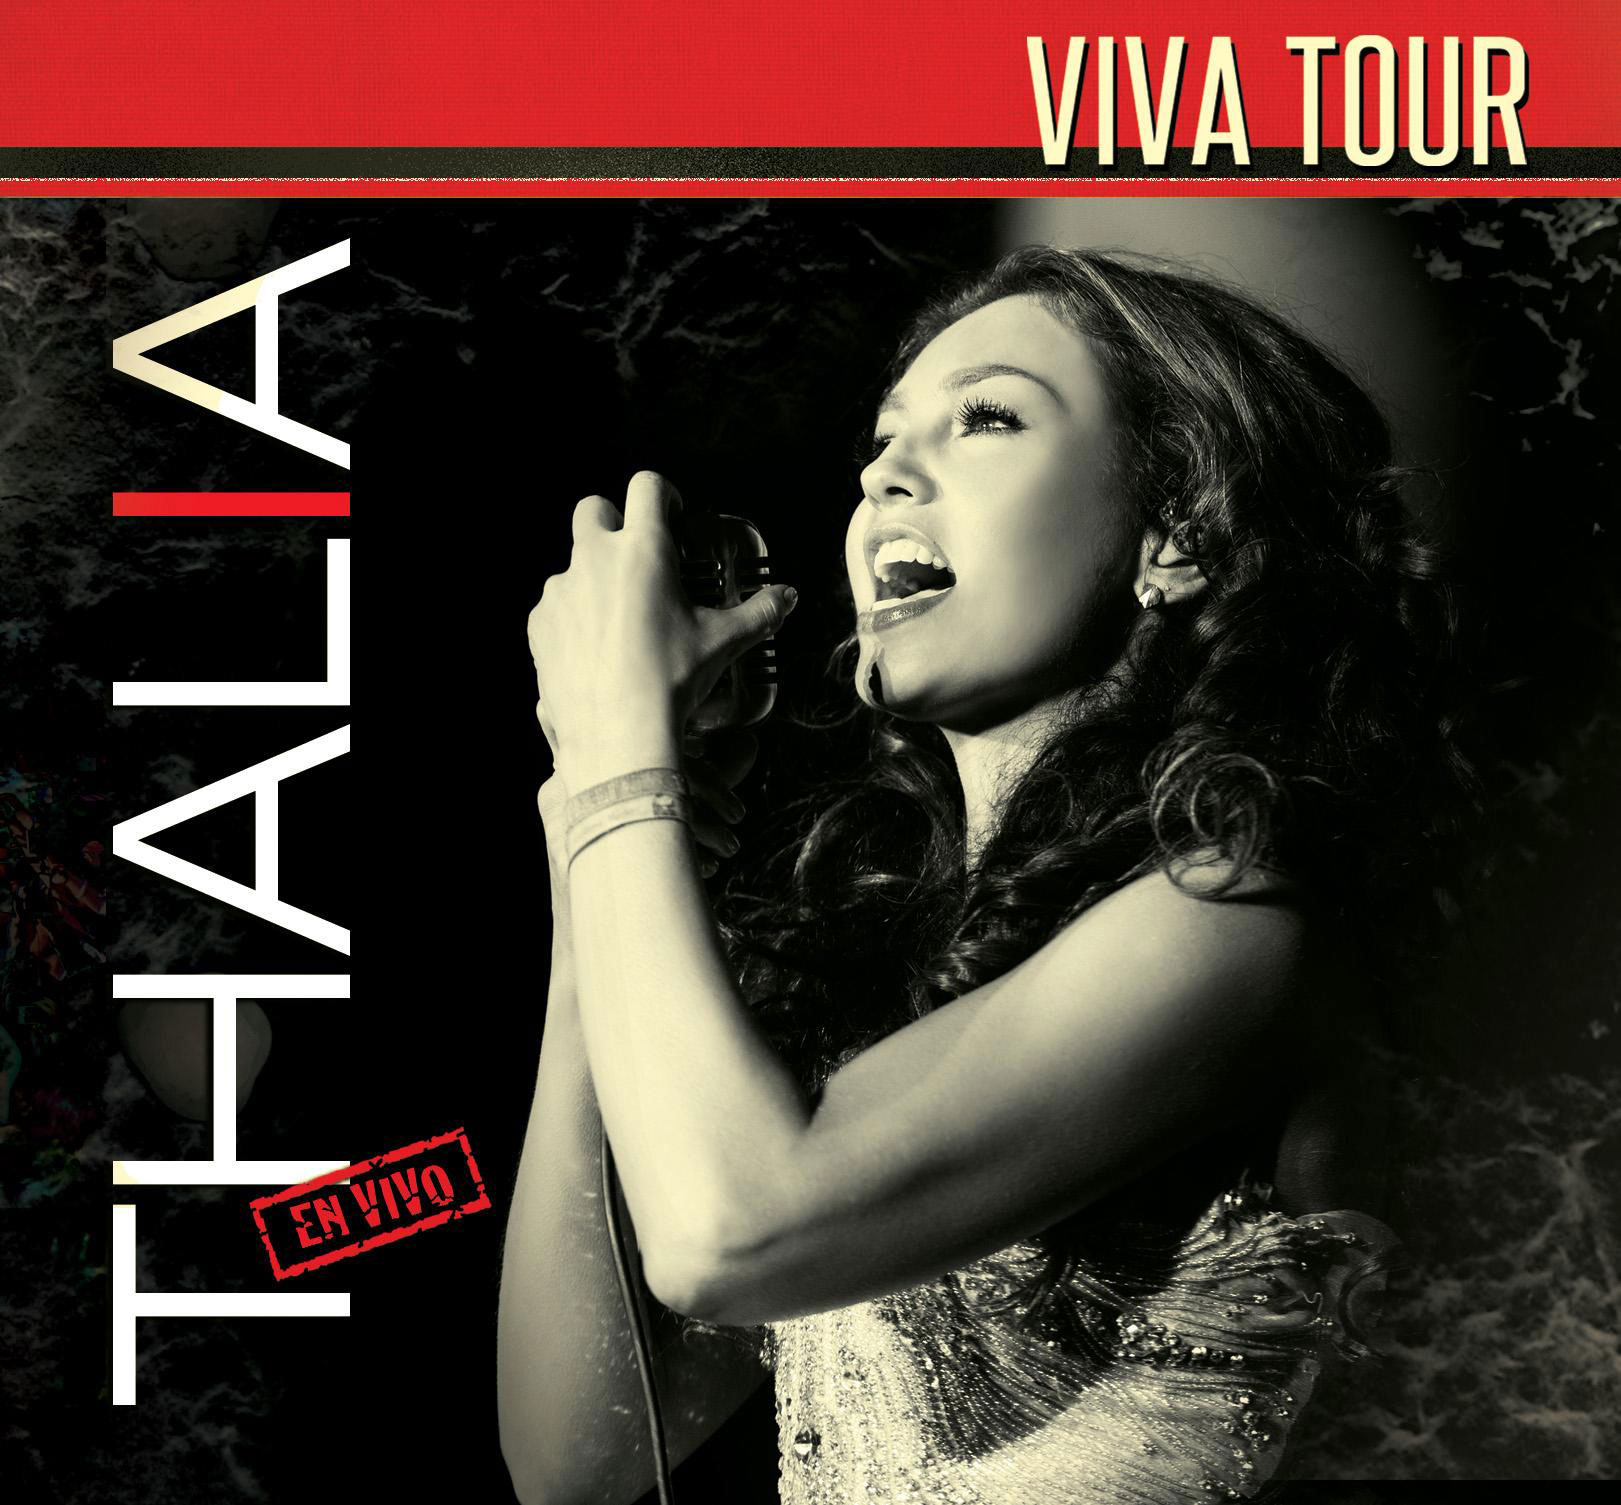 thalia concierto viva tour completo